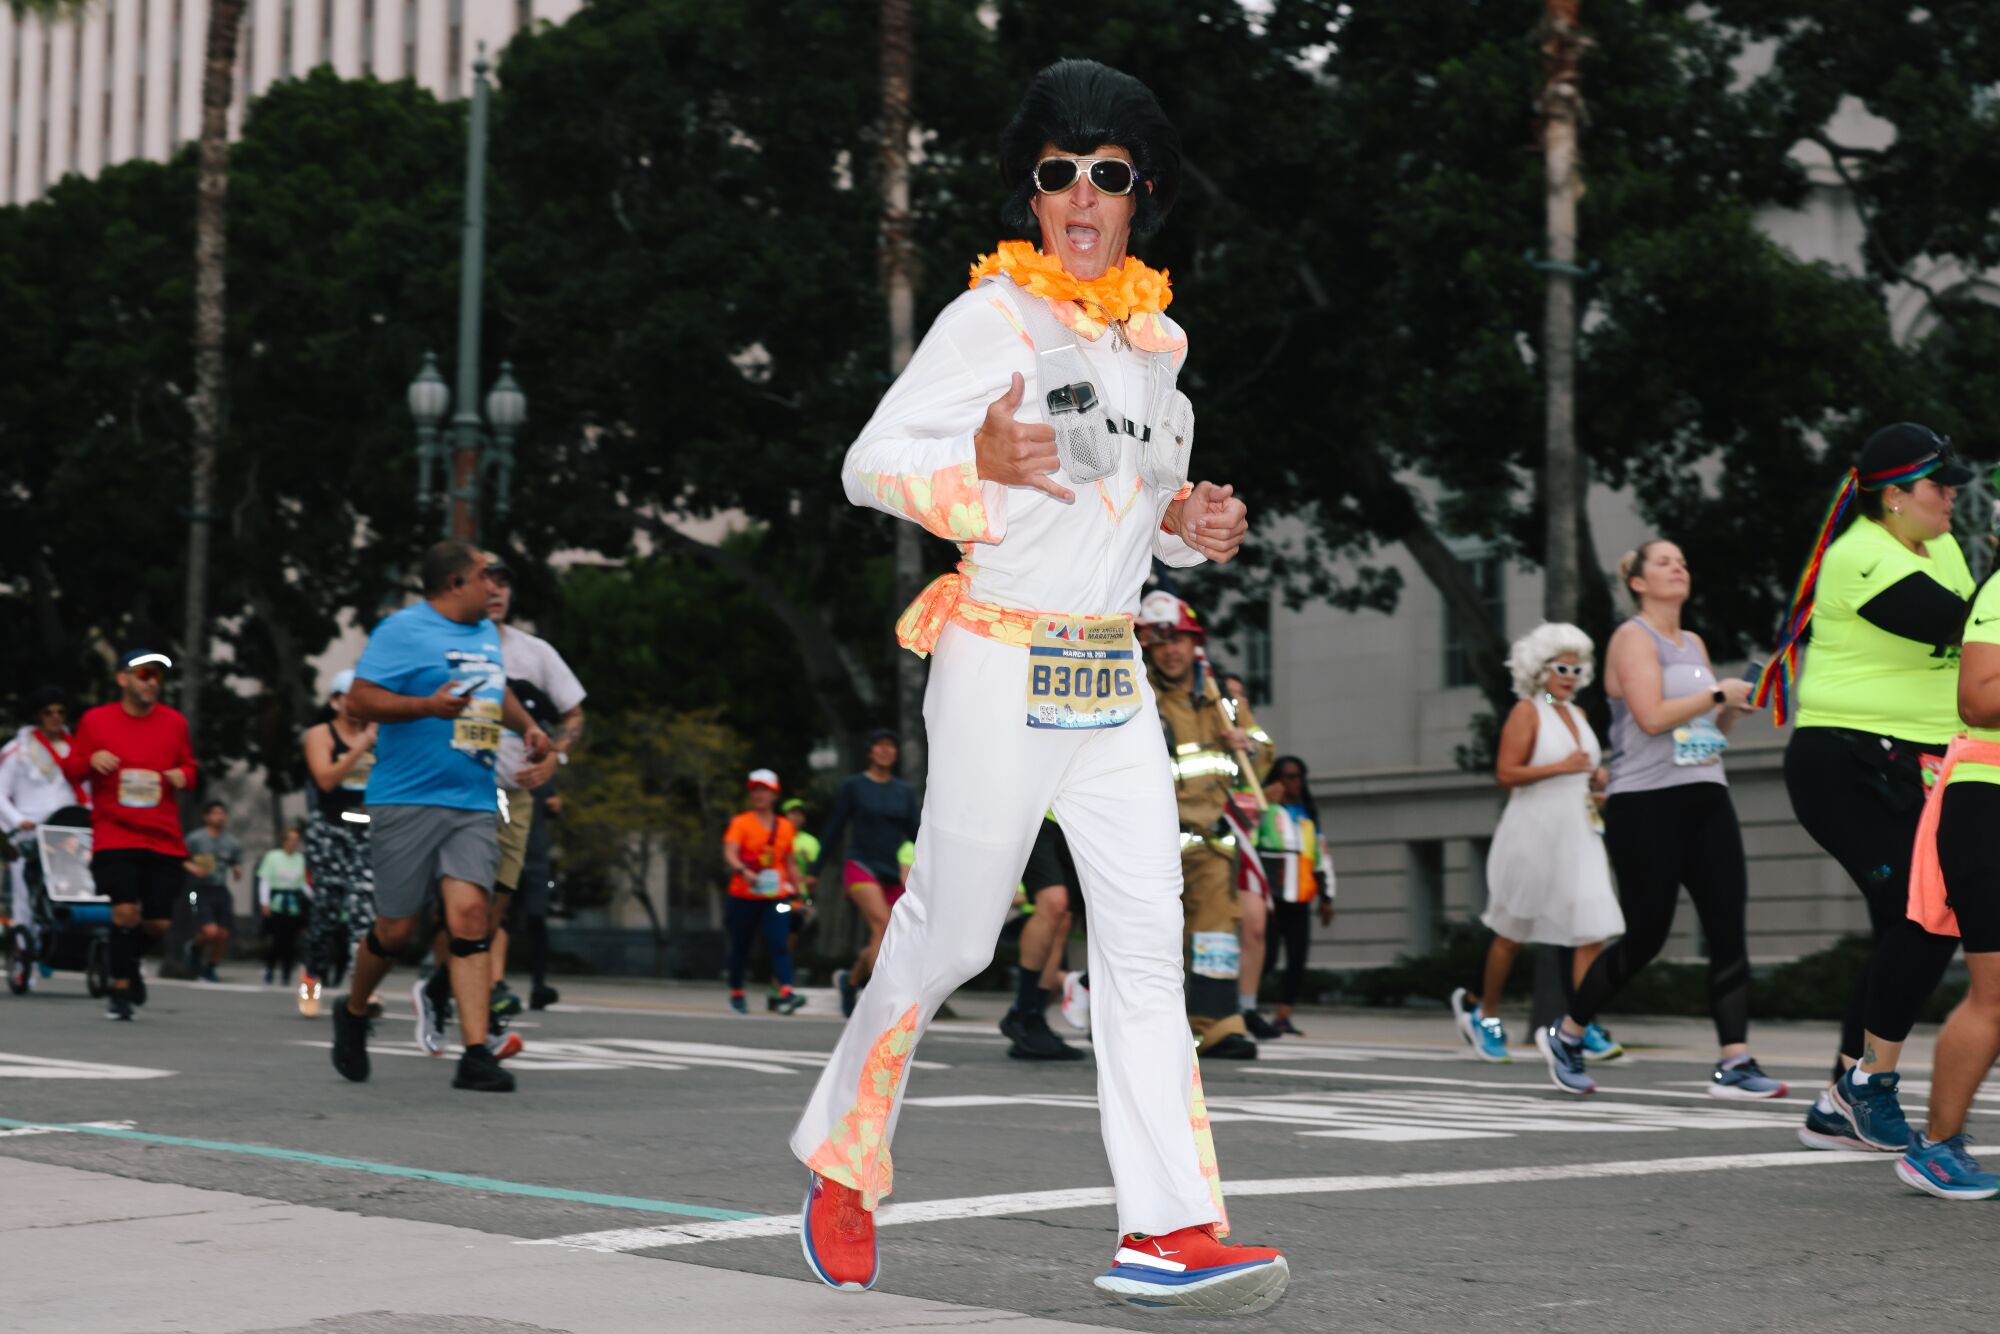 A runner dressed as Elvis Presley passing City Hall.